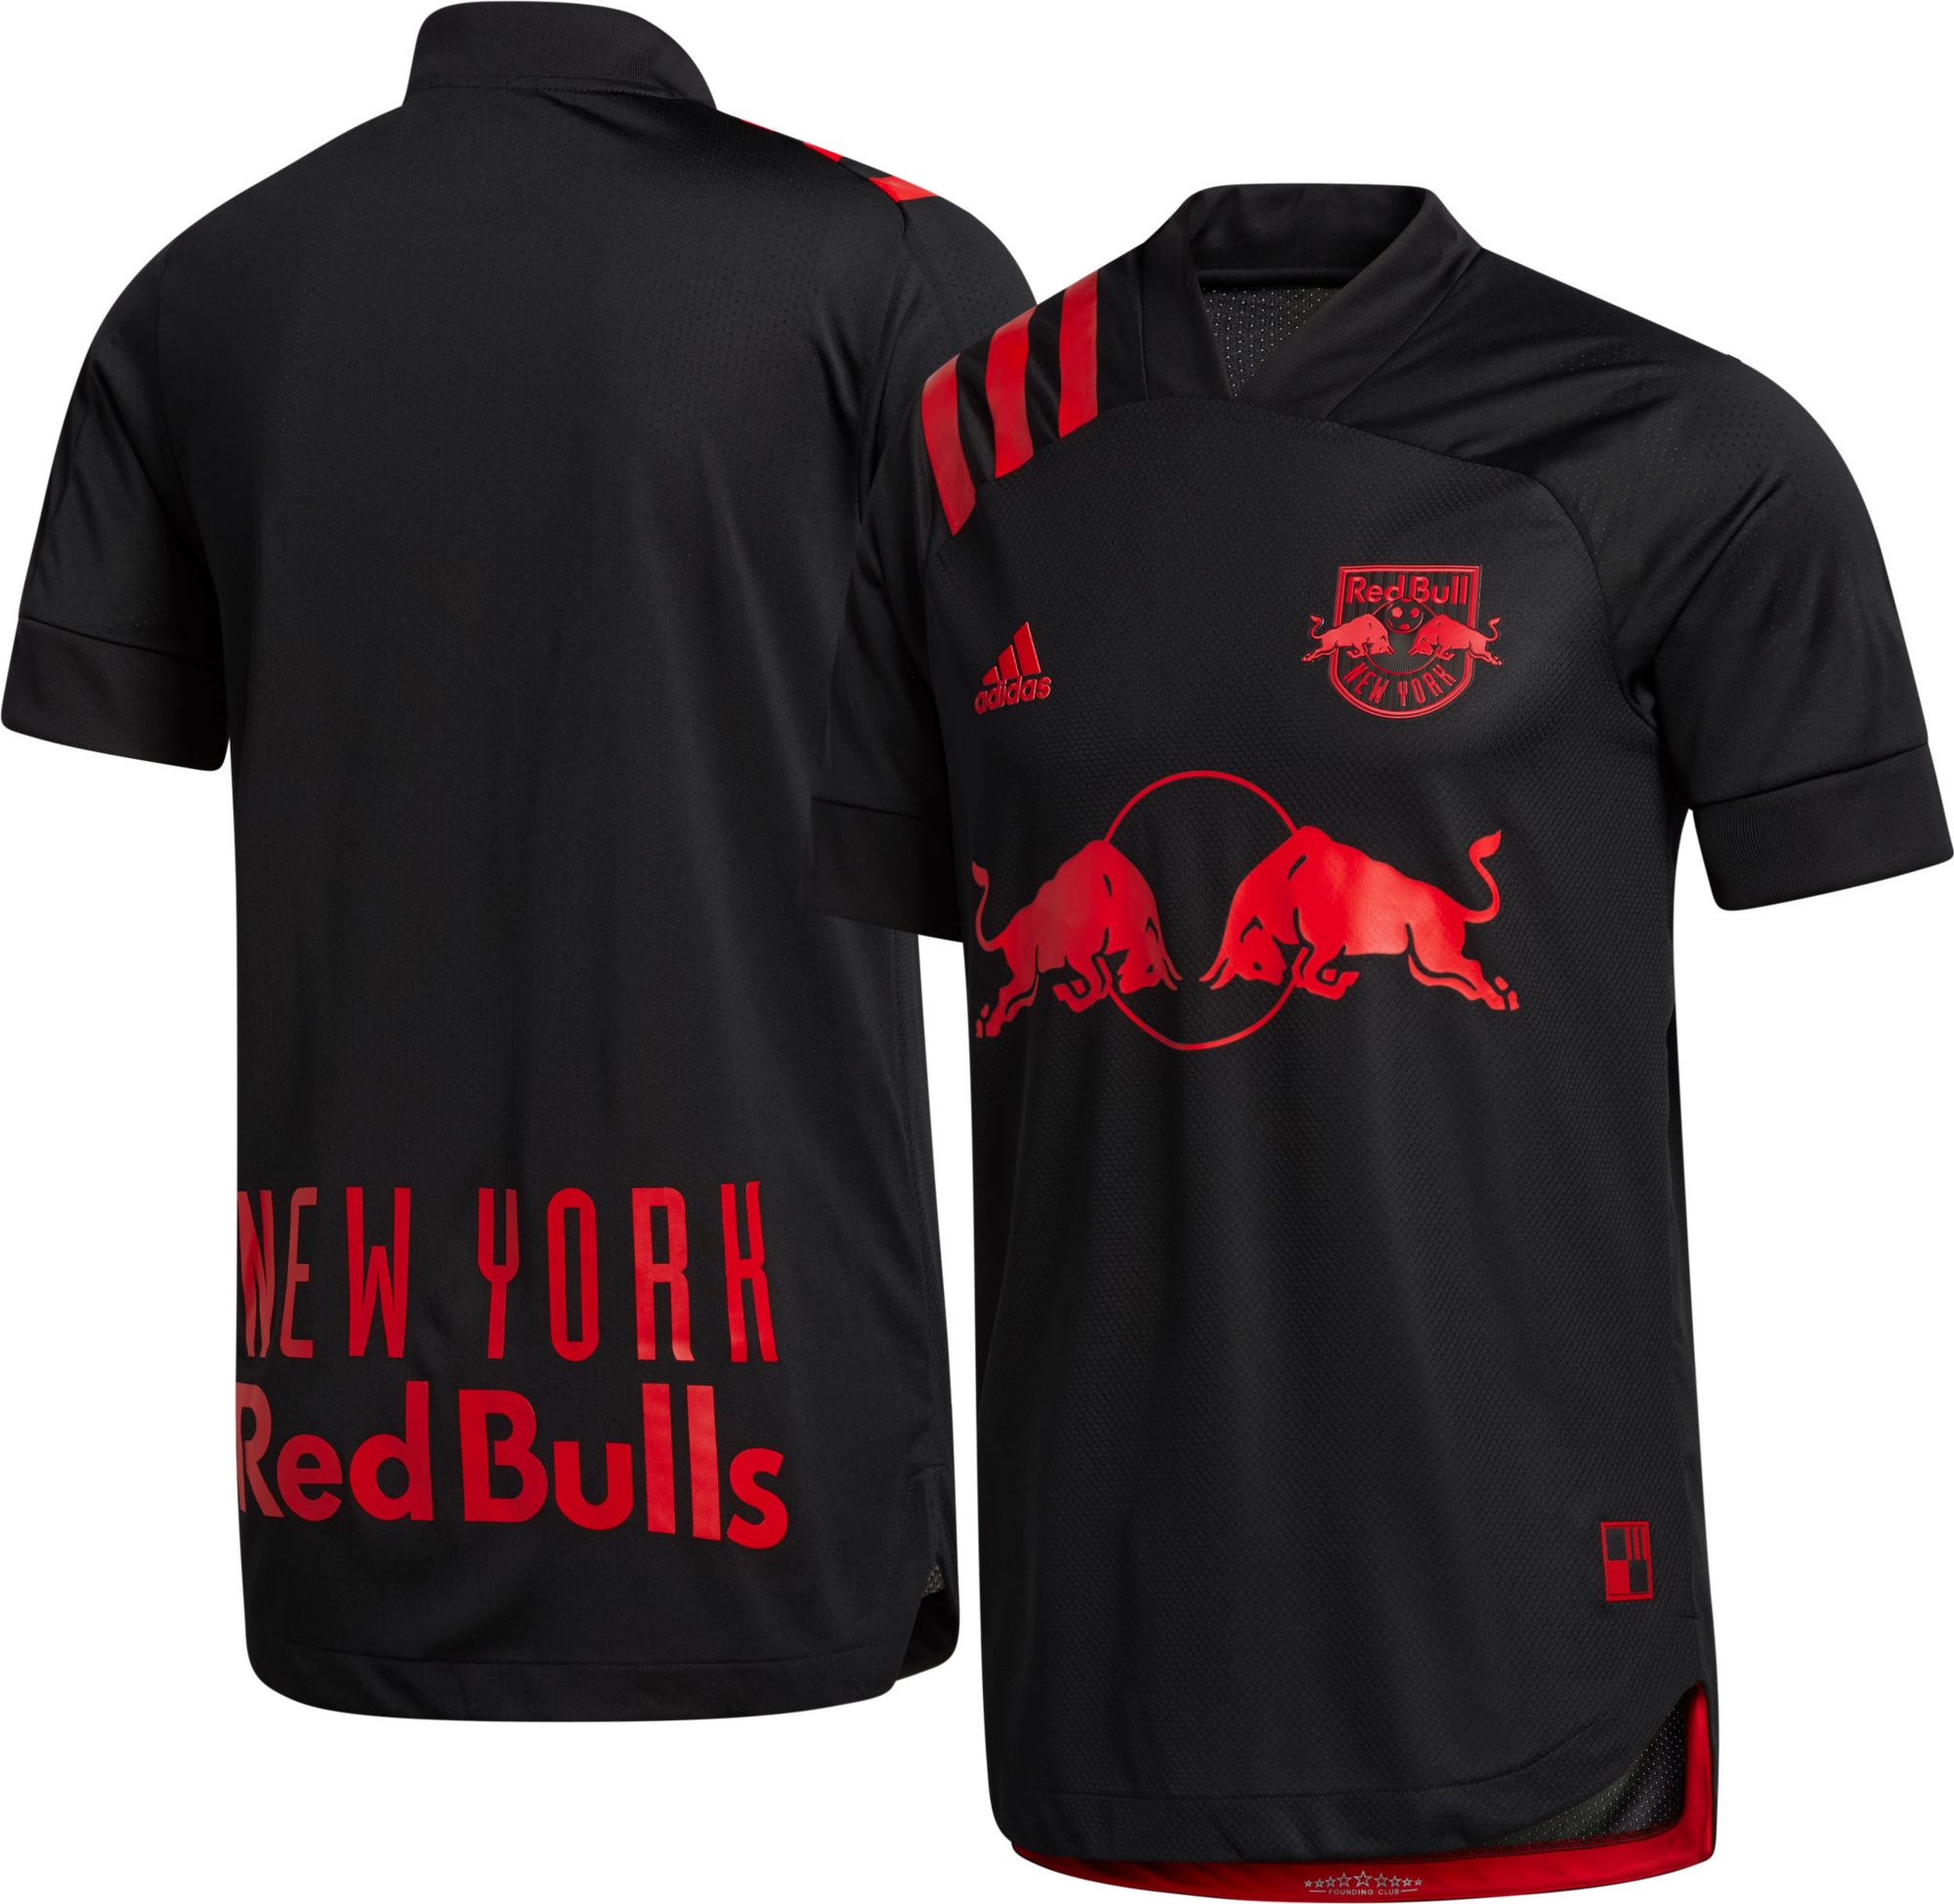 red bull new york shirt